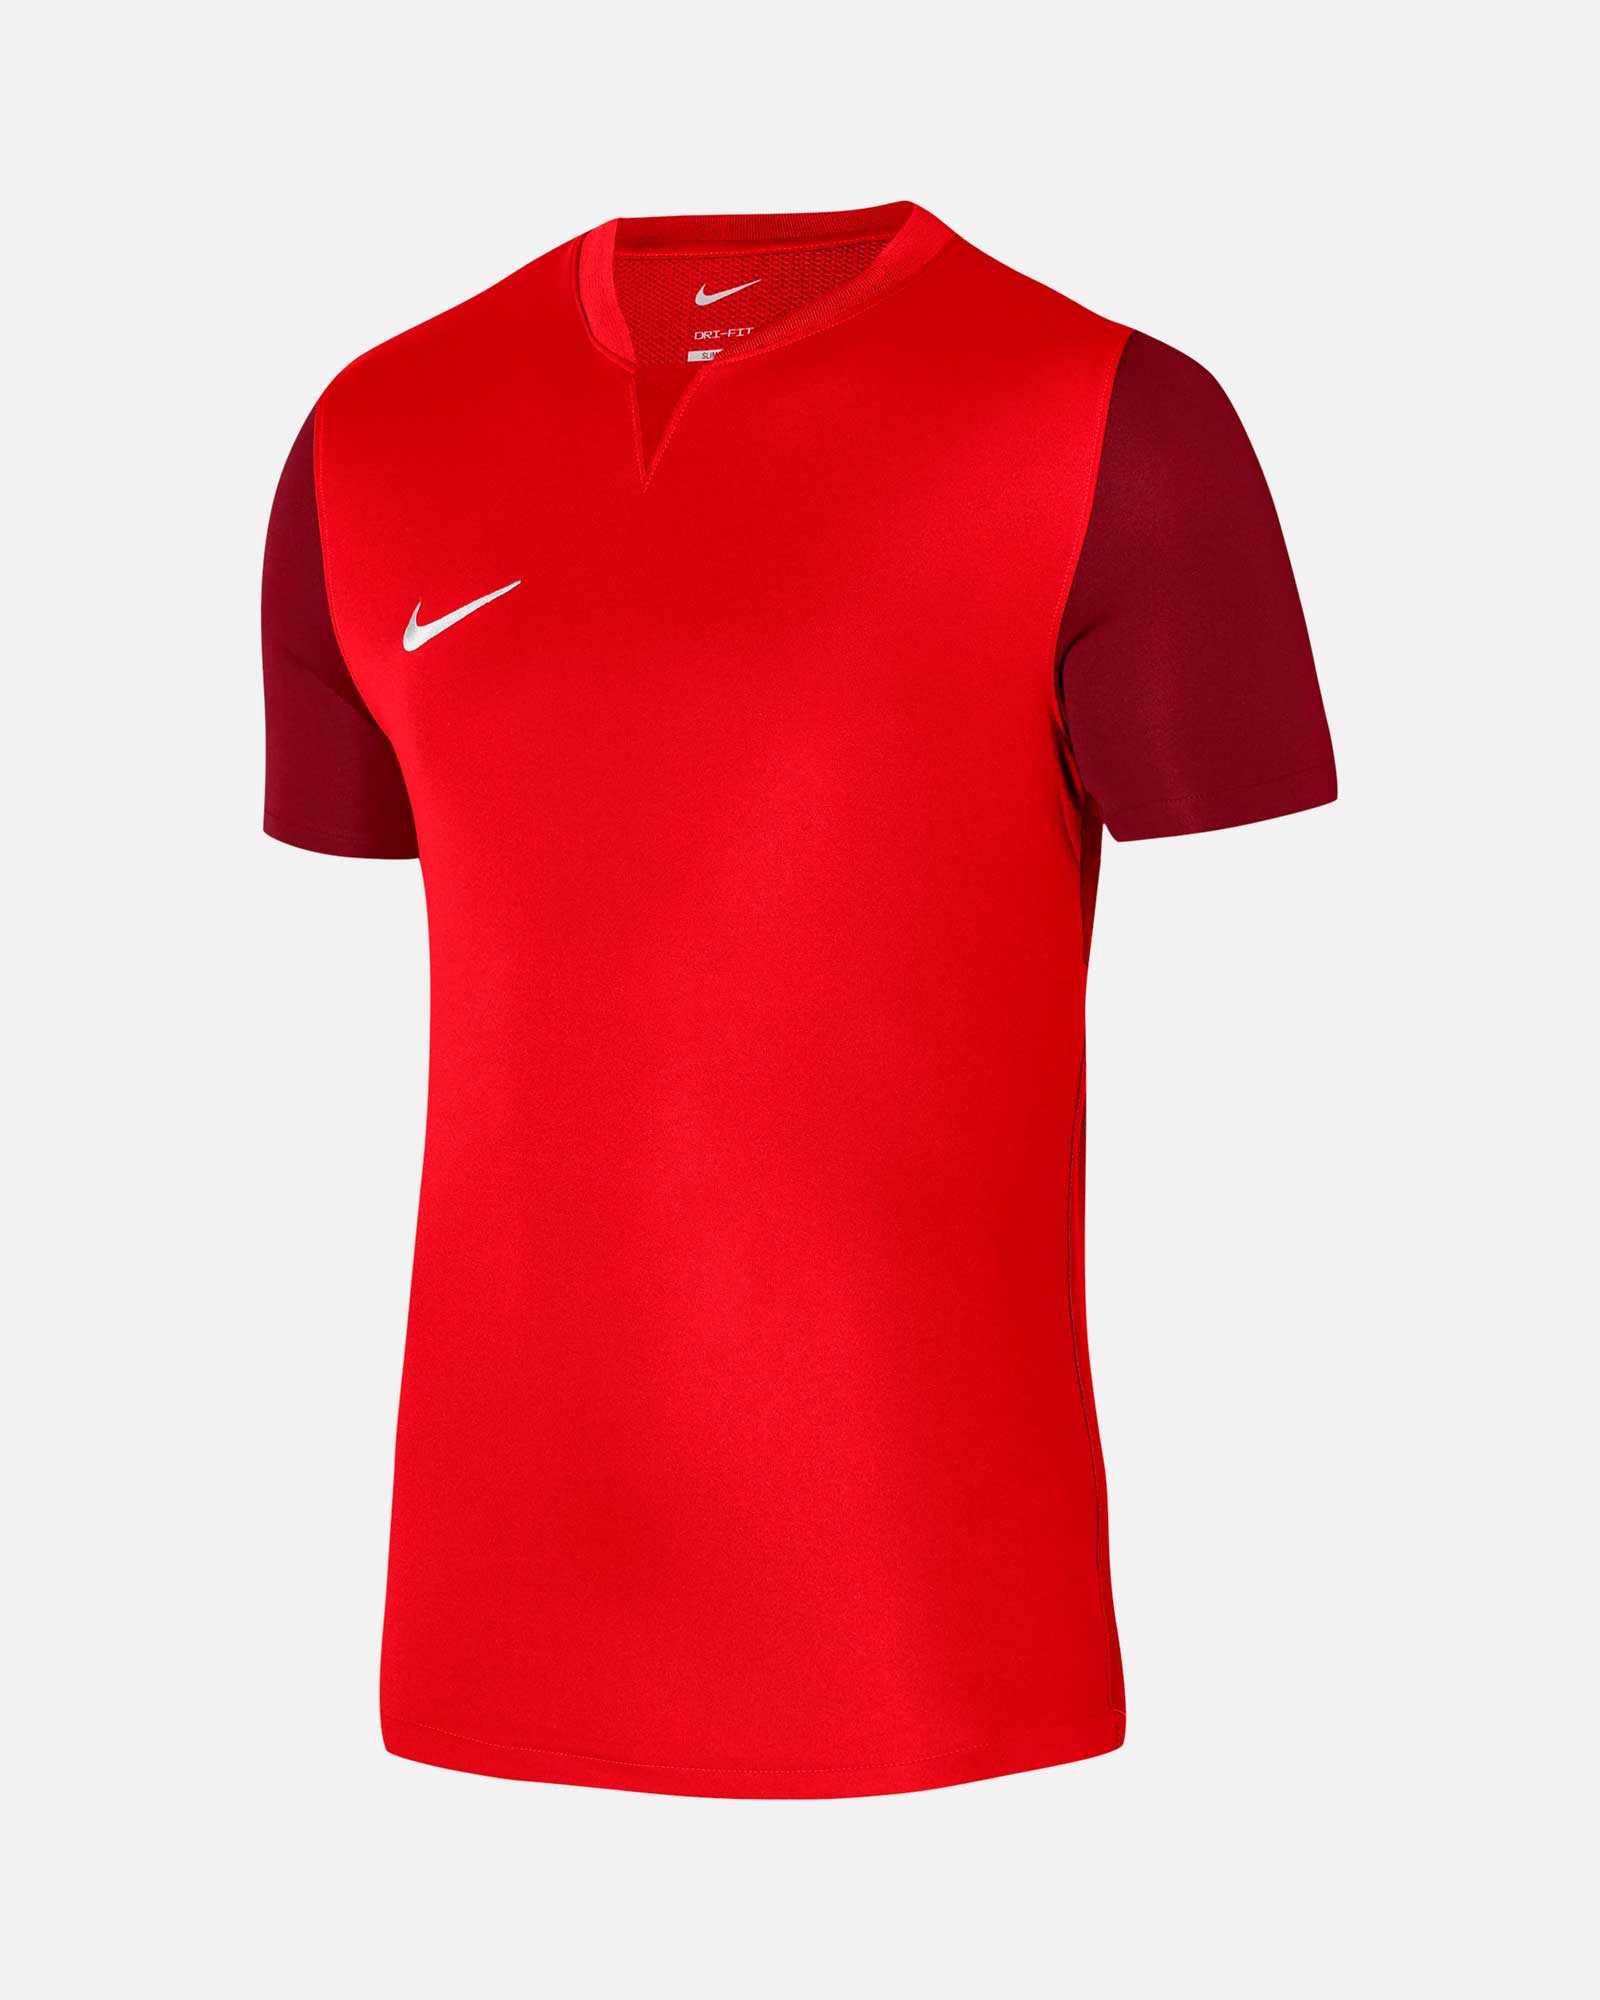 Camiseta Nike Tophy V